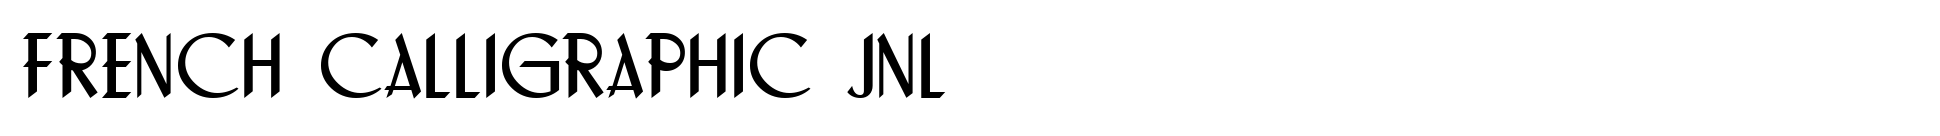 French Calligraphic JNL